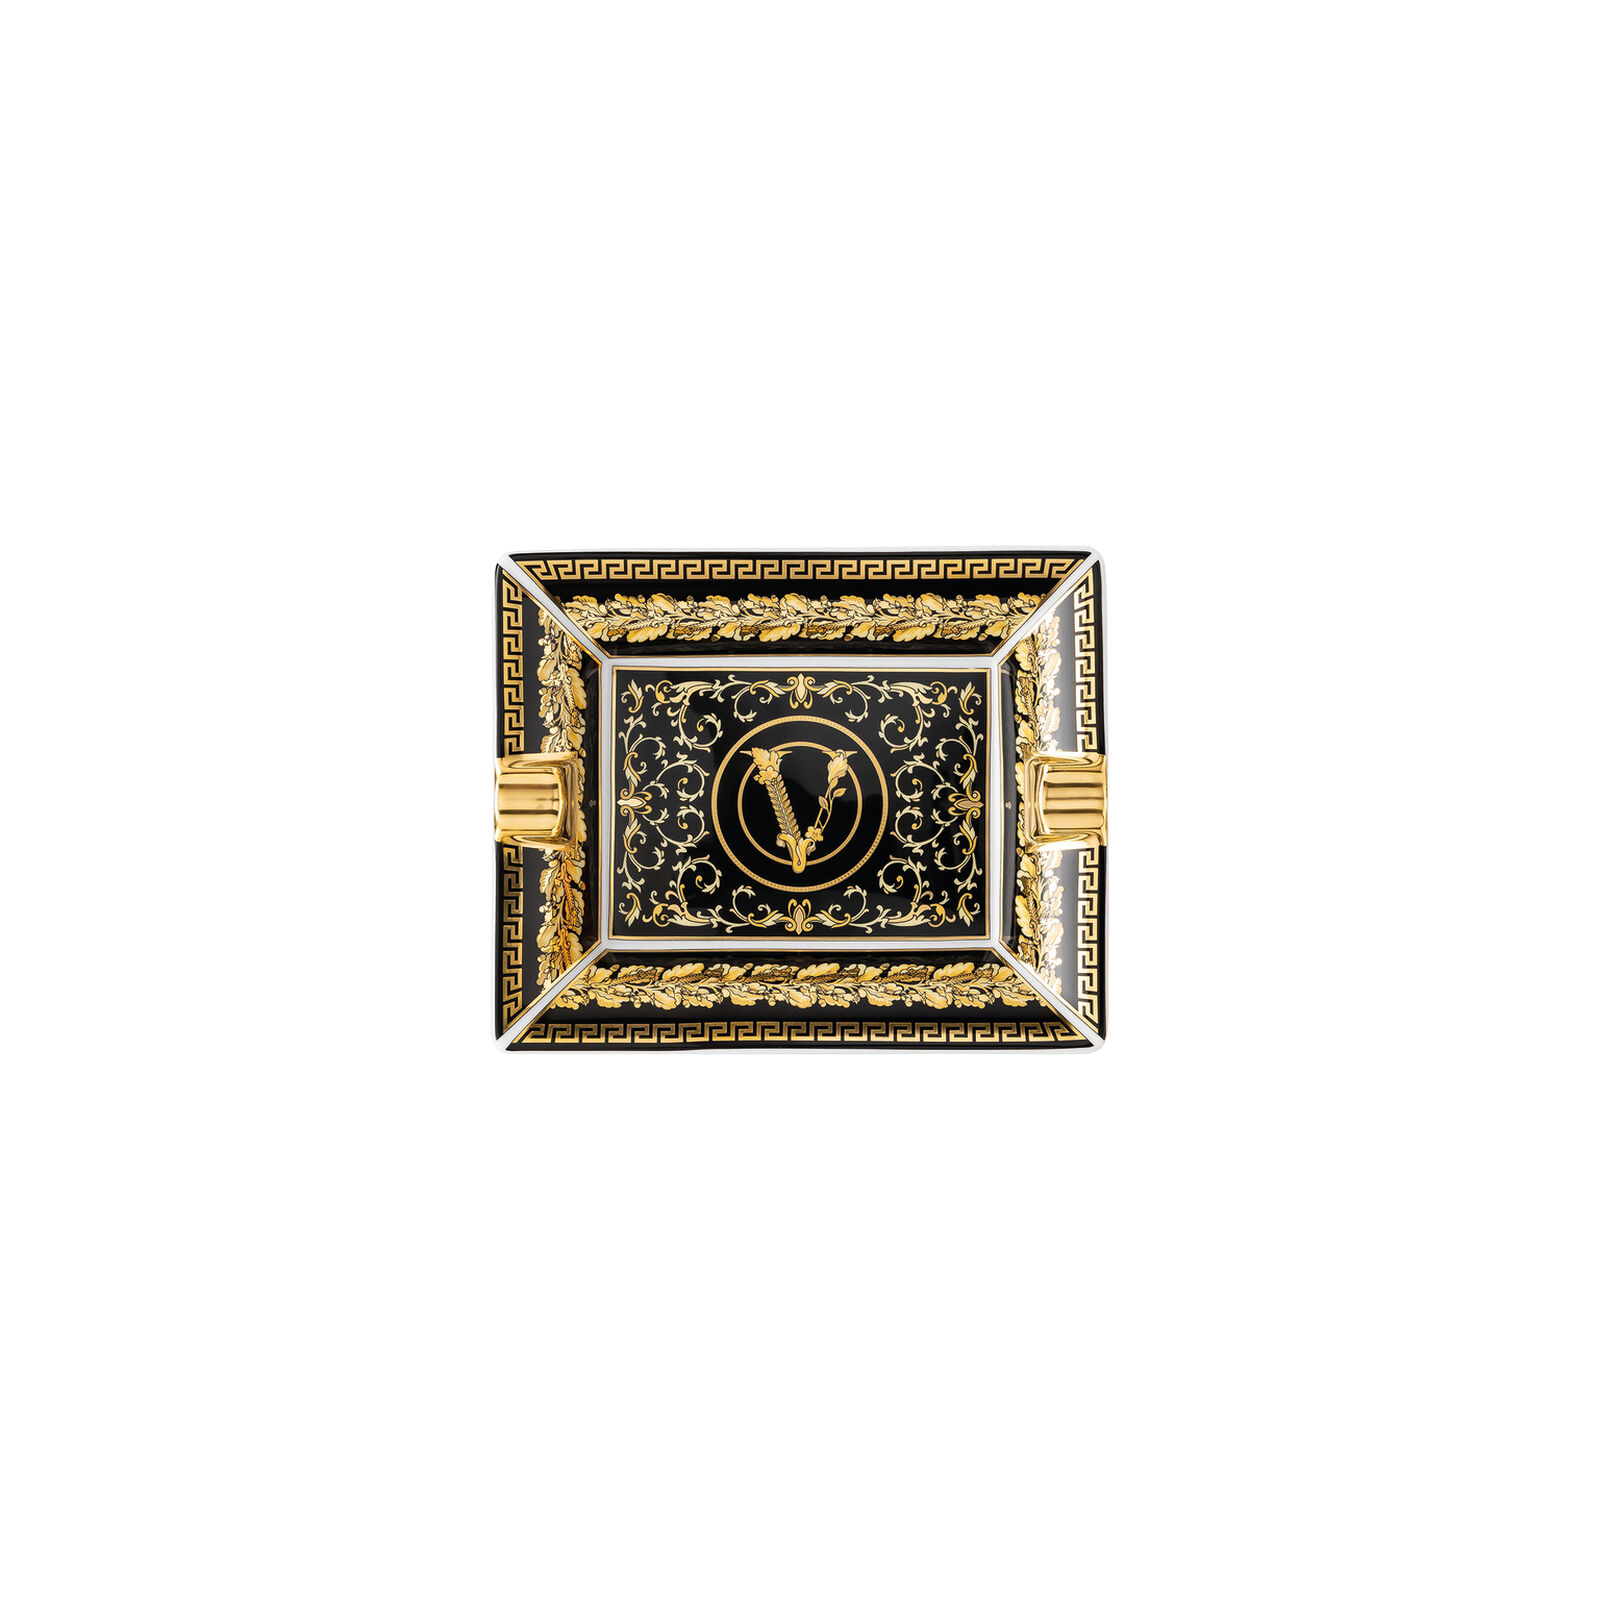 Versace Virtus Gala Ashtray - Gold